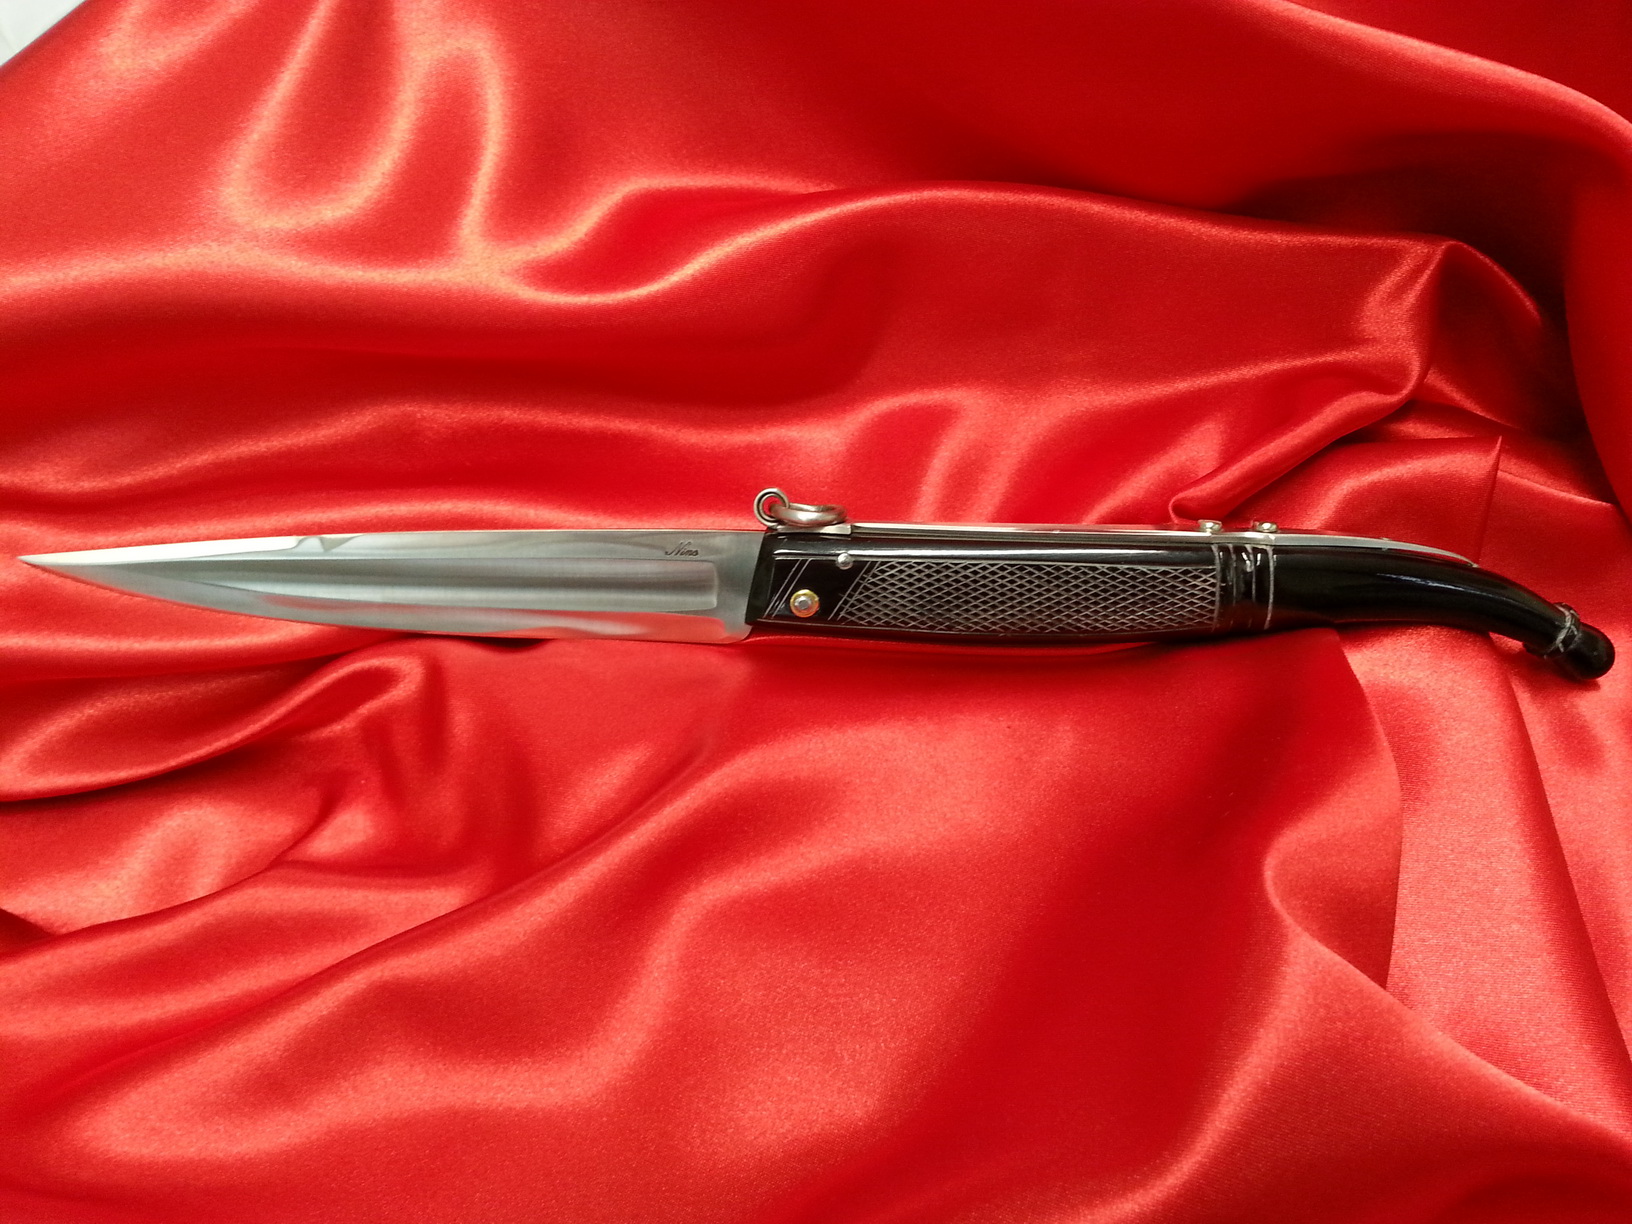 Традиционный нож из Италии, Coltello alla Romana knife